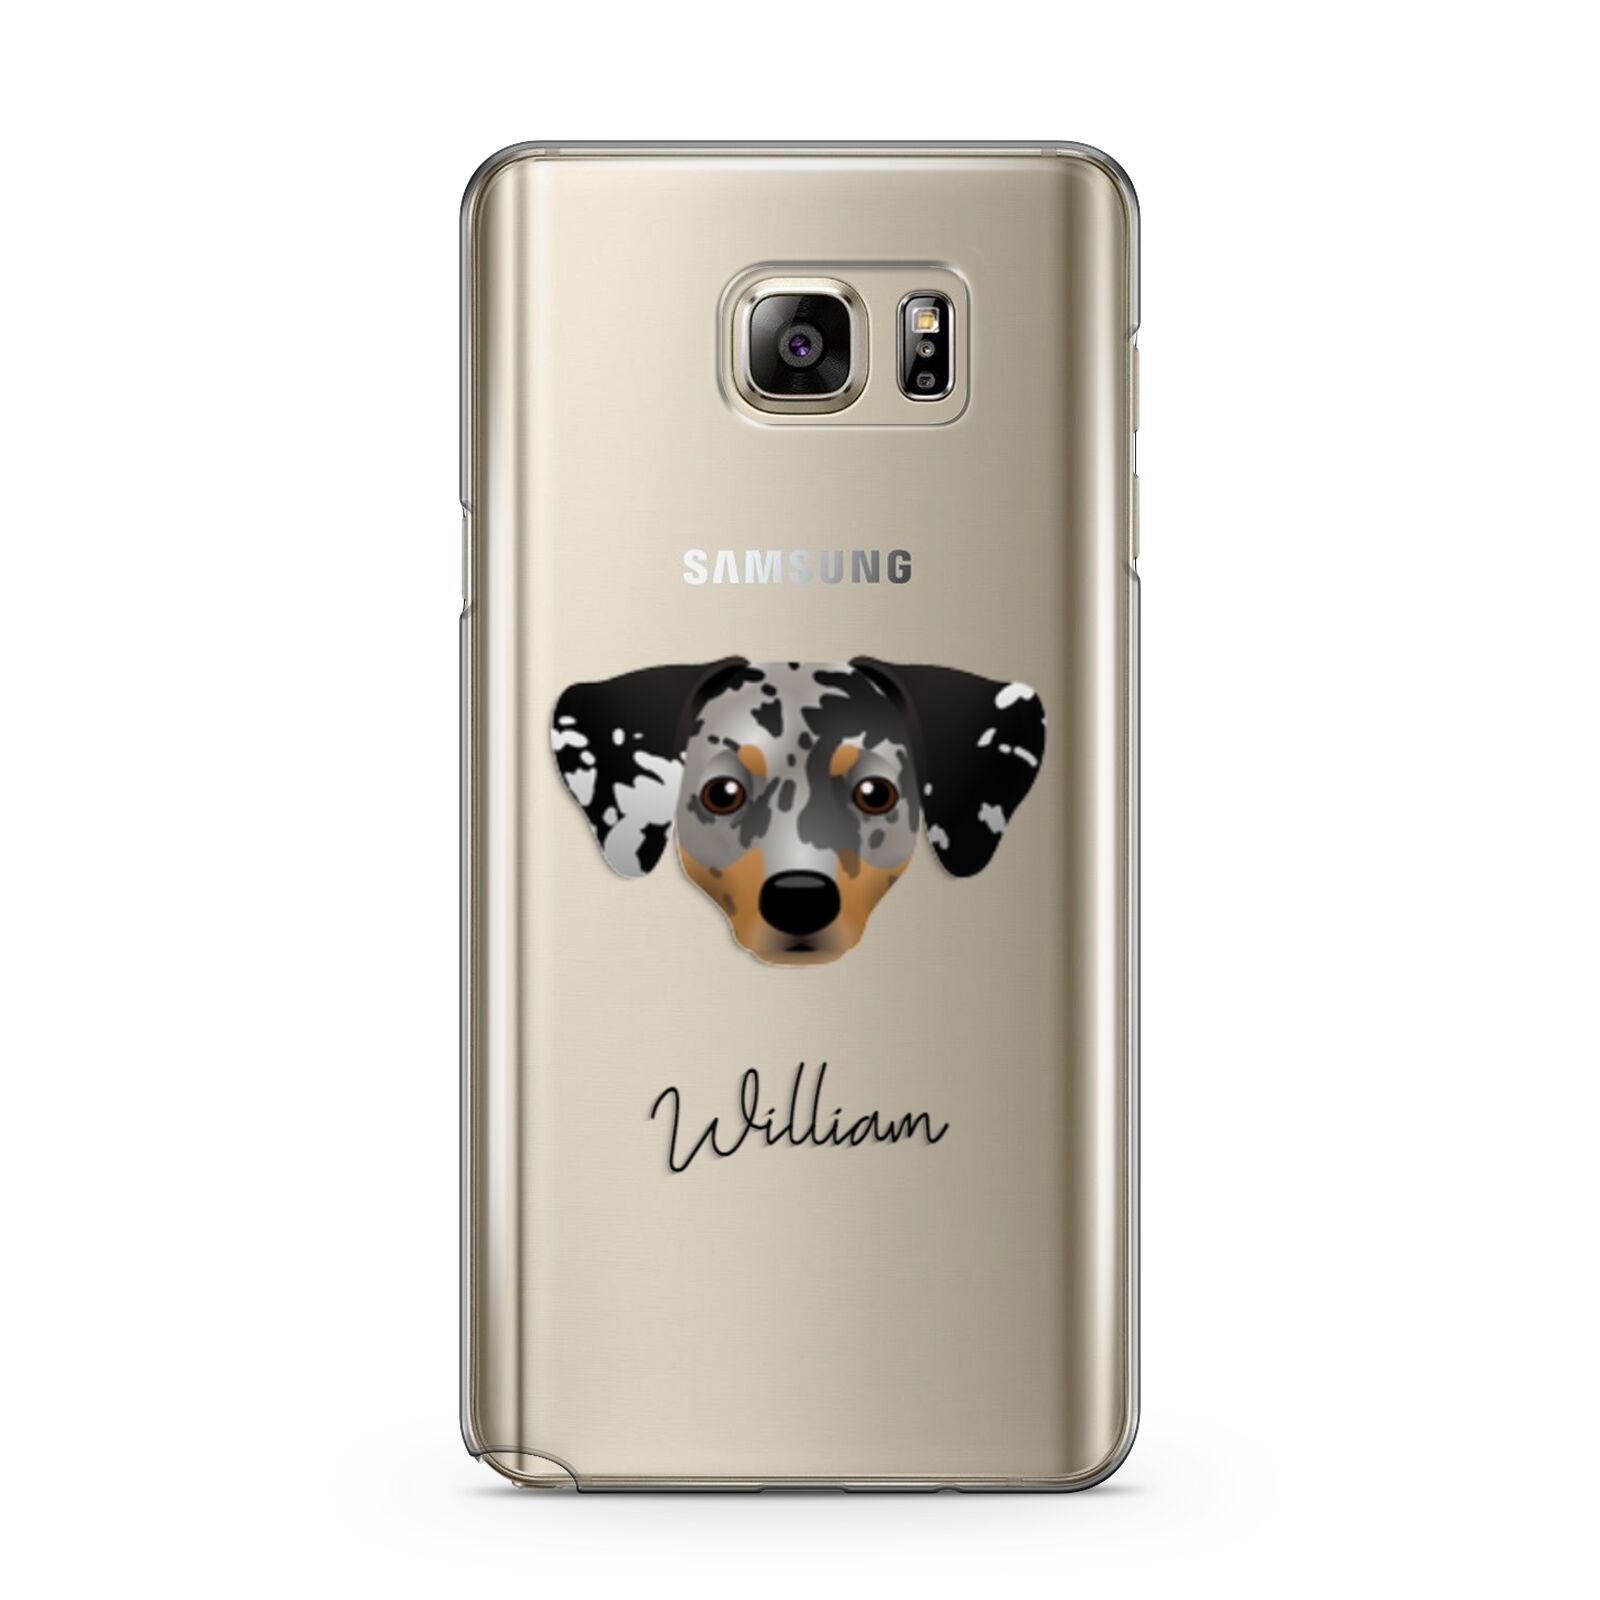 Chiweenie Personalised Samsung Galaxy Note 5 Case